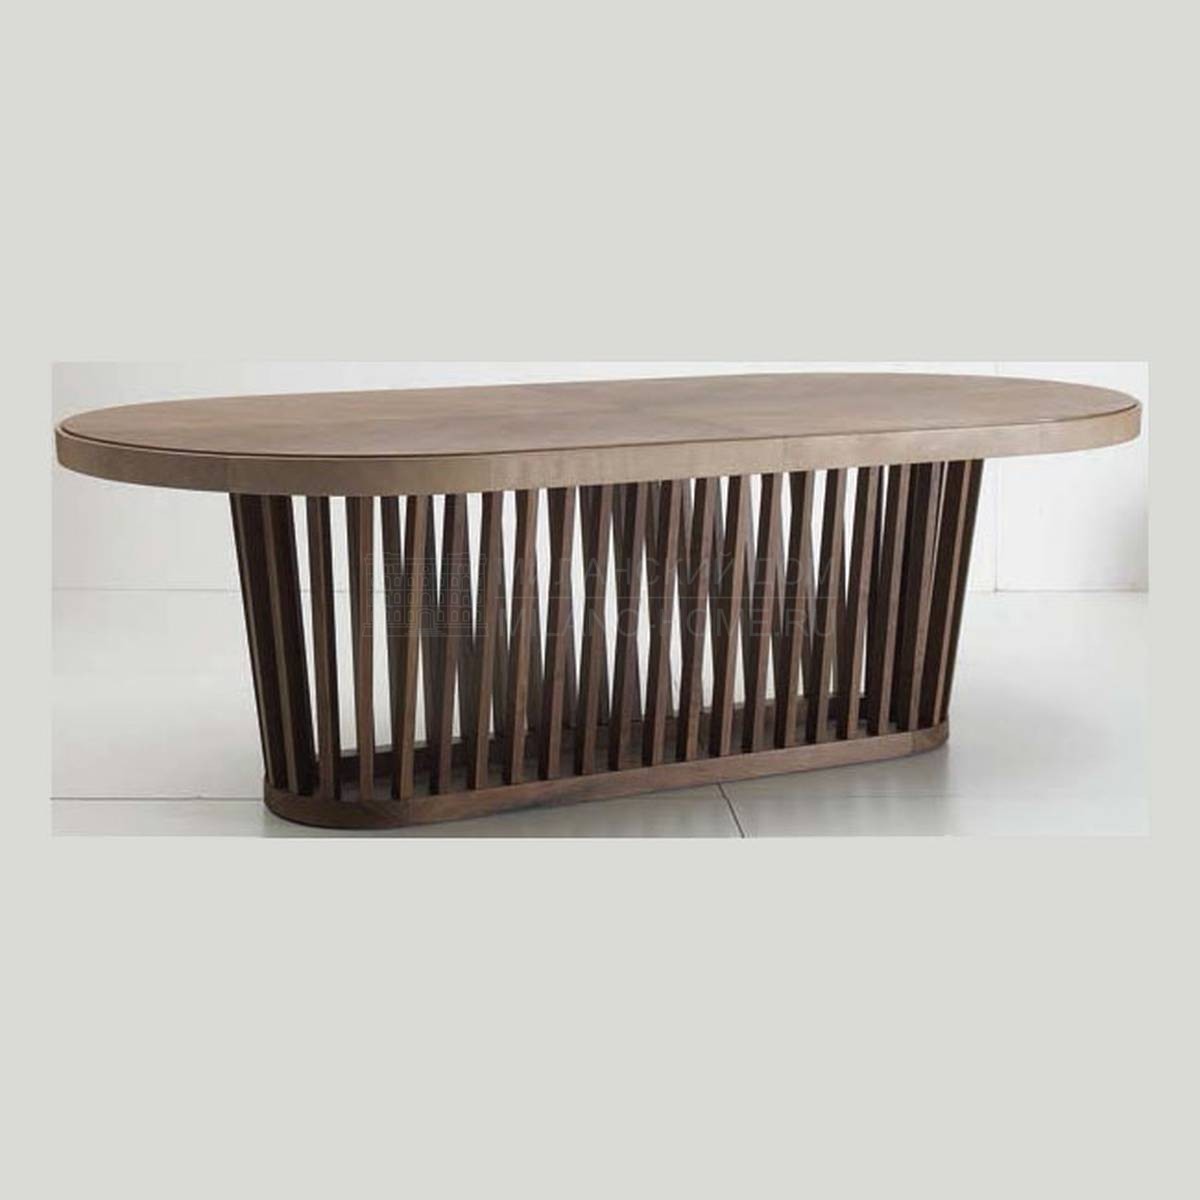 Обеденный стол Menphis Luxury Dining table из Италии фабрики ULIVI